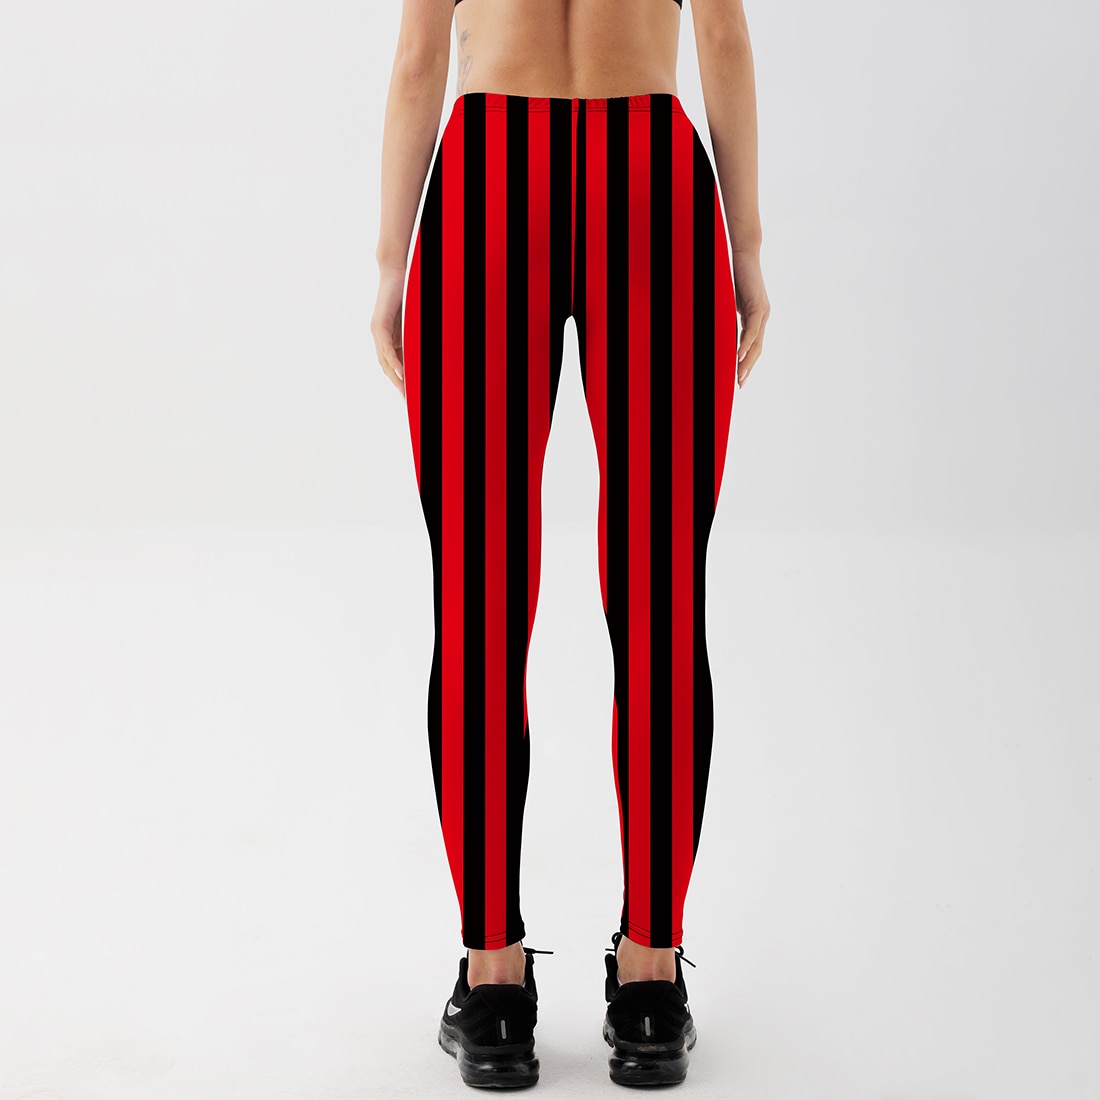 HOT Sexy Fashion Hot Pirate Leggins Pants Digital Printing BEETLEJUICE RED LEGGINGS For Women